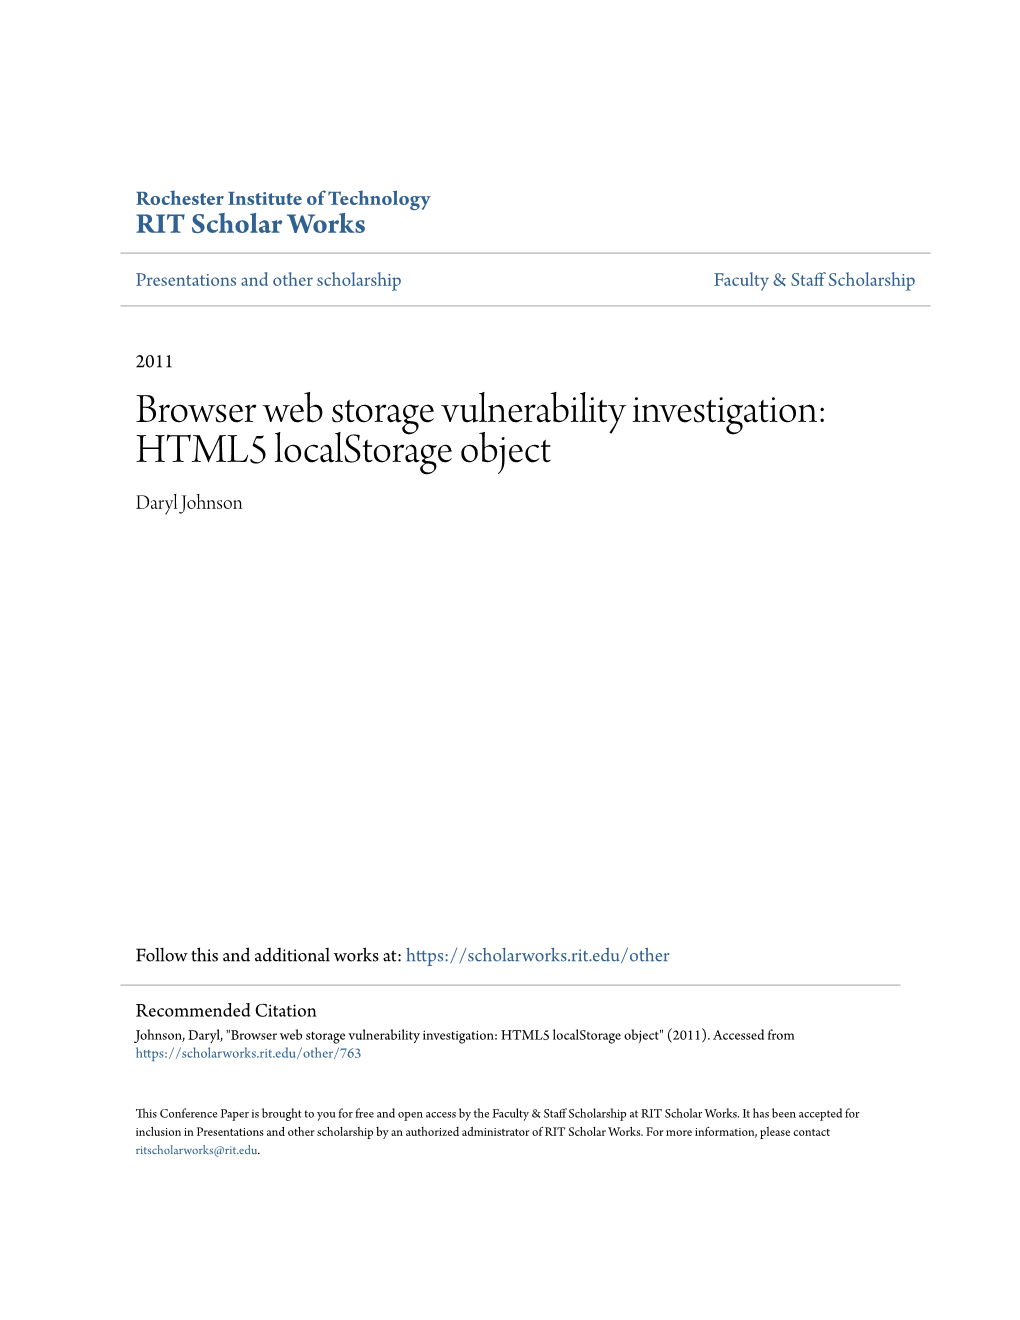 Browser Web Storage Vulnerability Investigation: HTML5 Localstorage Object Daryl Johnson